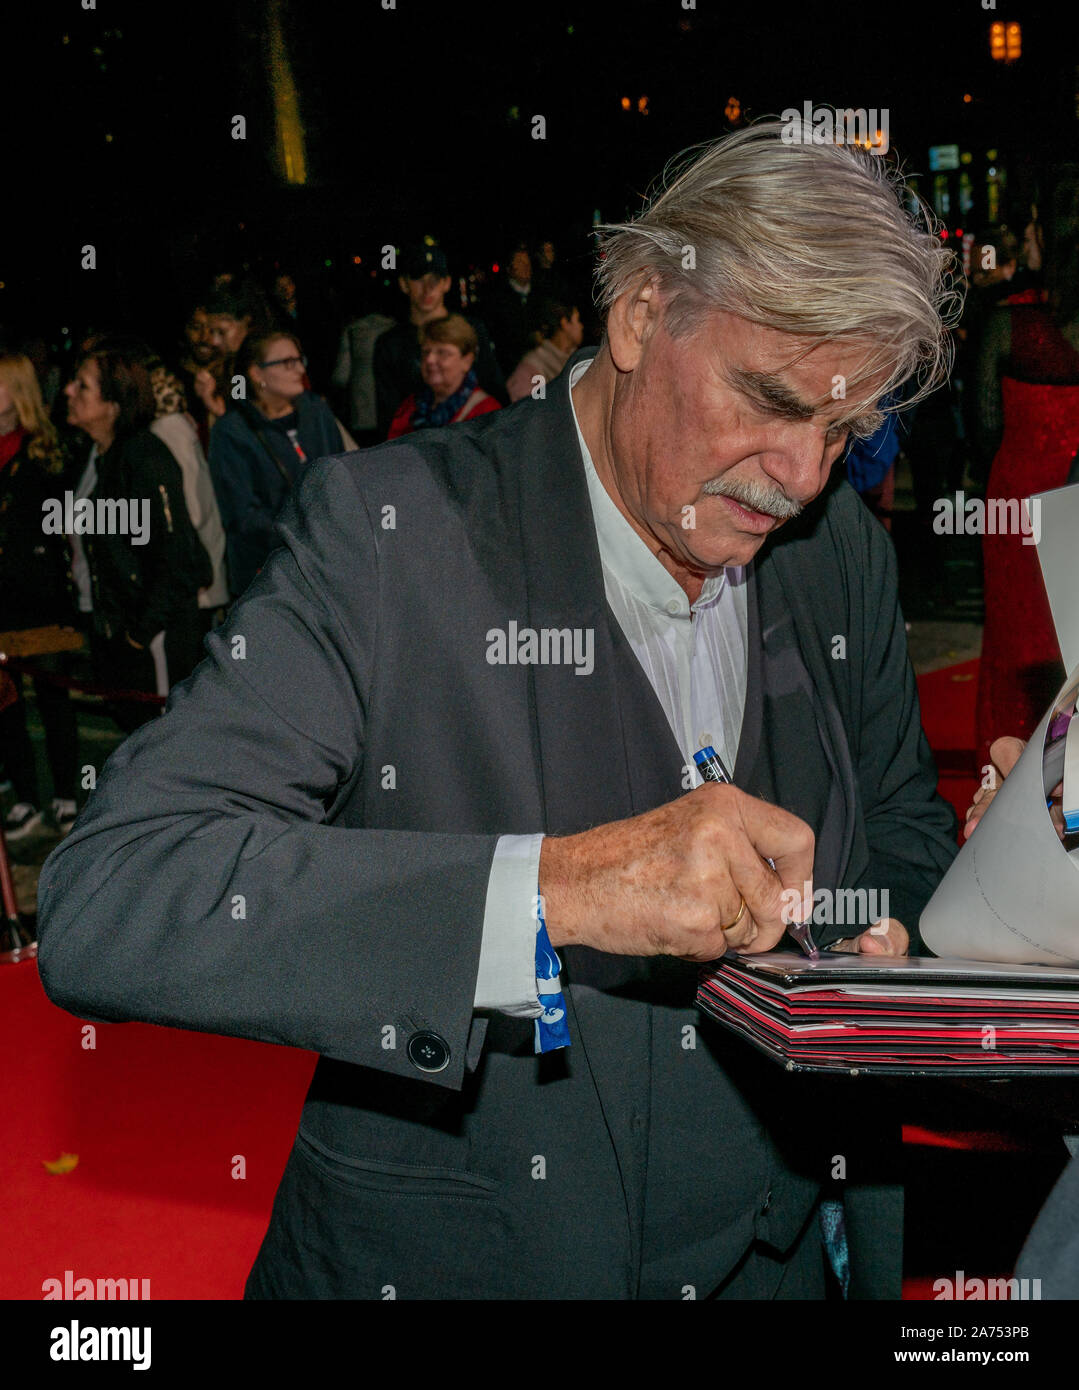 FRANKFURT am Main, Alemania - 18 de octubre 2019: Peter Simonischek (*1946, el actor austriaco) firmando autógrafos para los fans del Hessischer Film- und Kinopreis 2019, alfombra roja, Frankfurt am Main Foto de stock